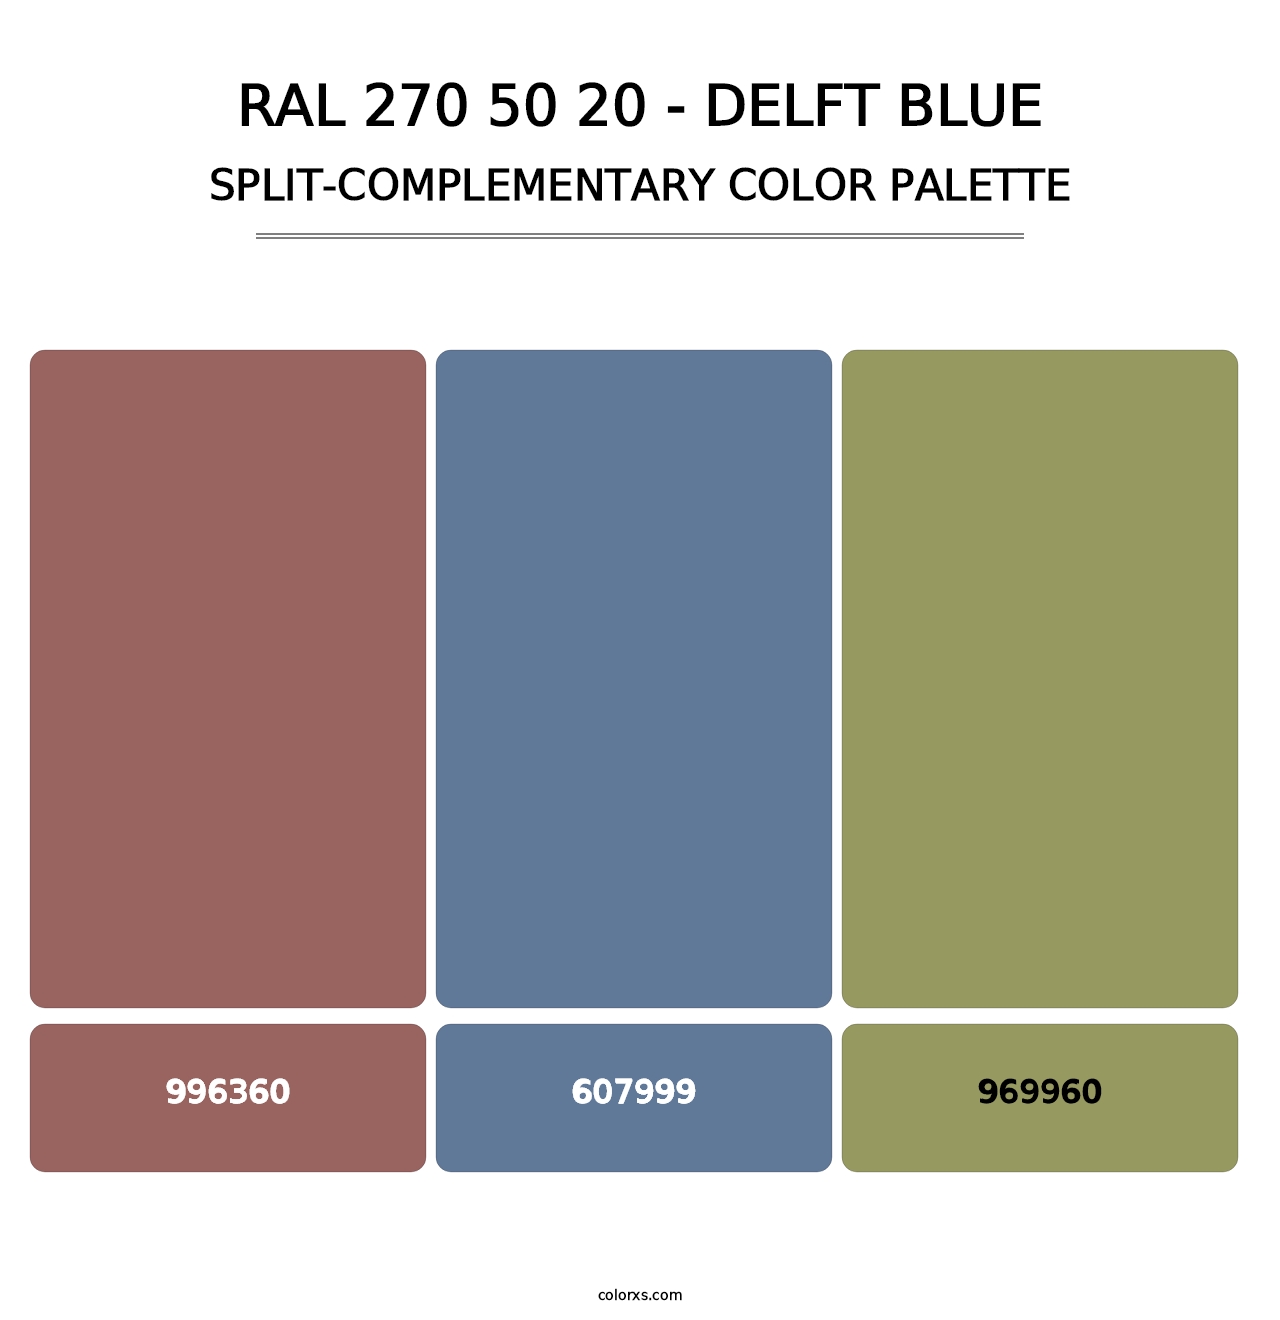 RAL 270 50 20 - Delft Blue - Split-Complementary Color Palette